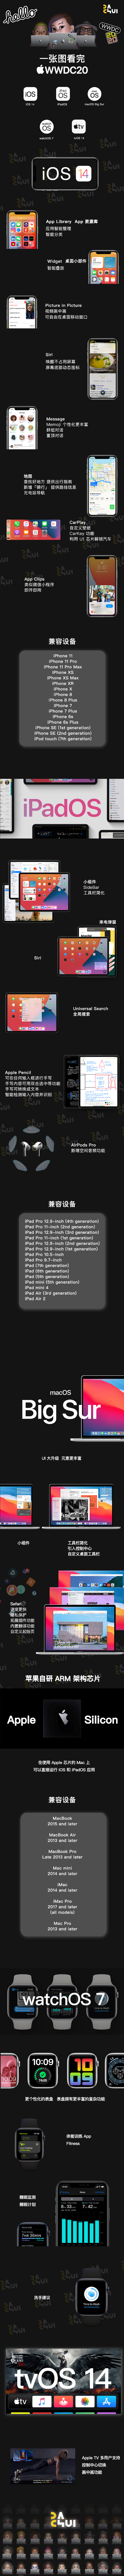 ios14正式发布_抢先体验最新版苹果系统方法_一张图带你看完整个苹果WWDC20